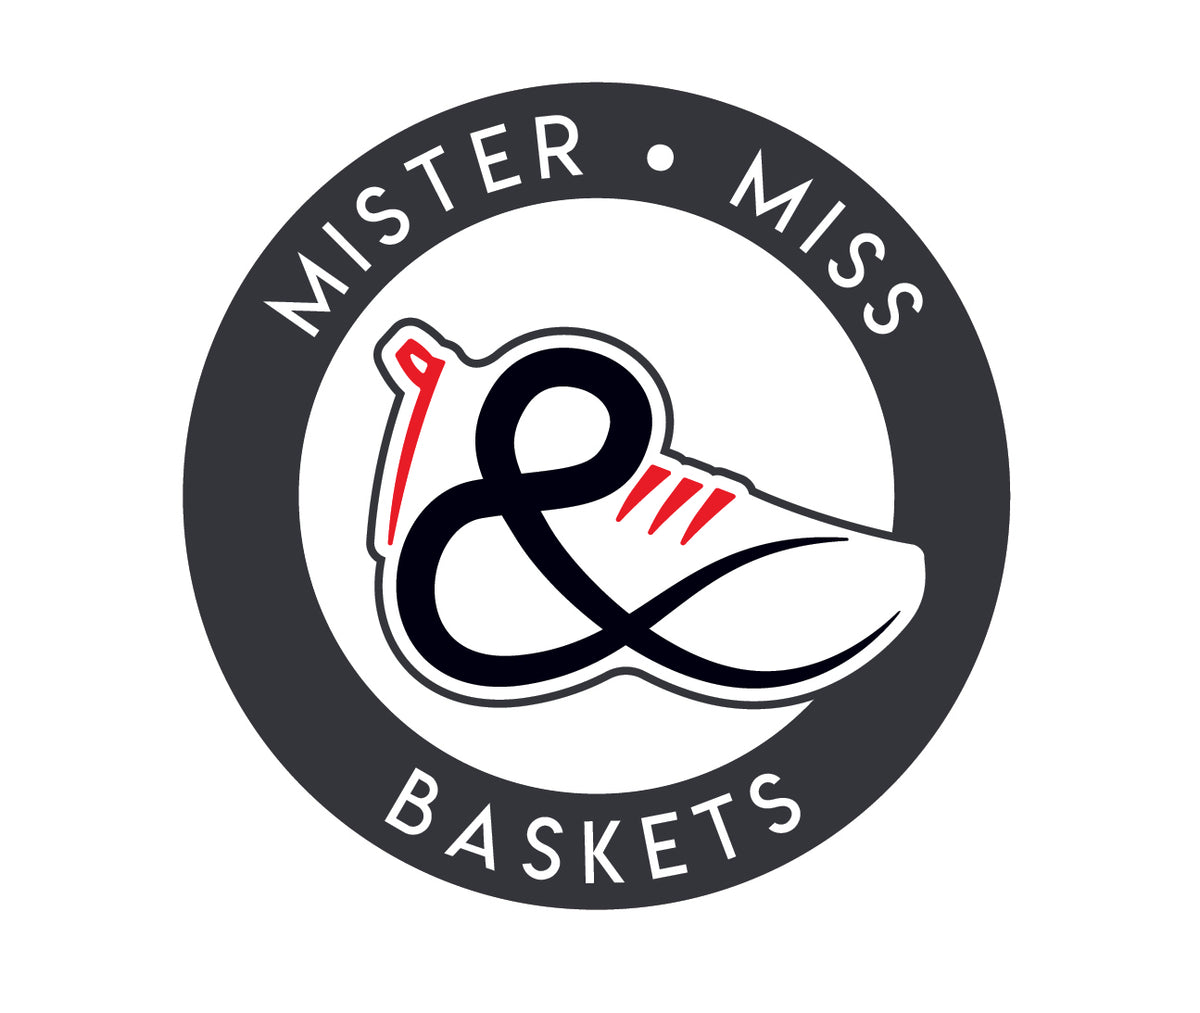 Mr & Mrs Baskets